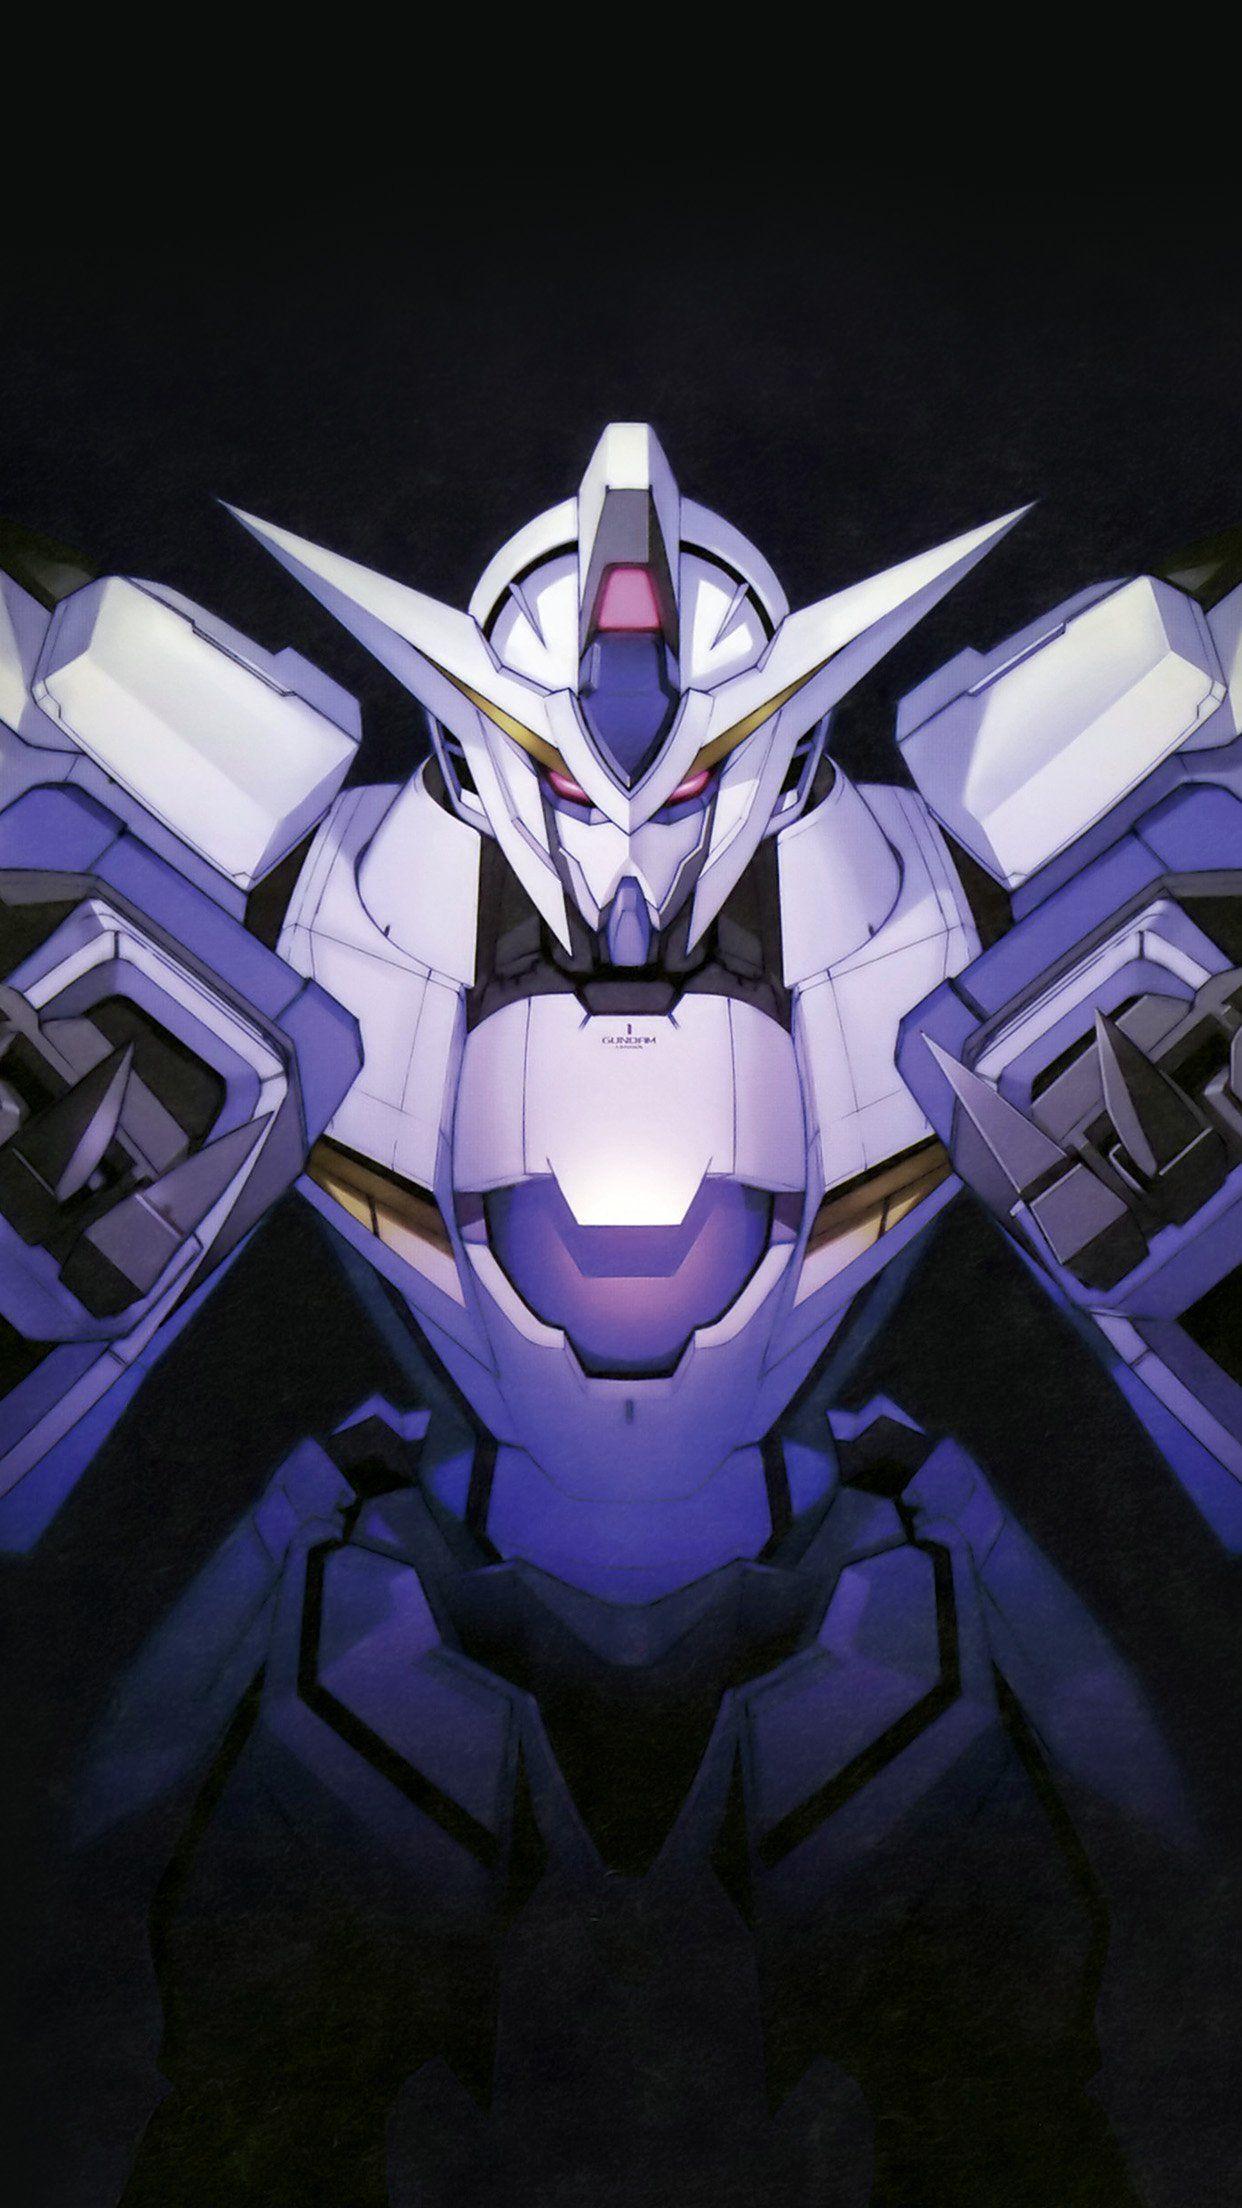 Gundam Iphone Wallpapers Top Free Gundam Iphone Backgrounds